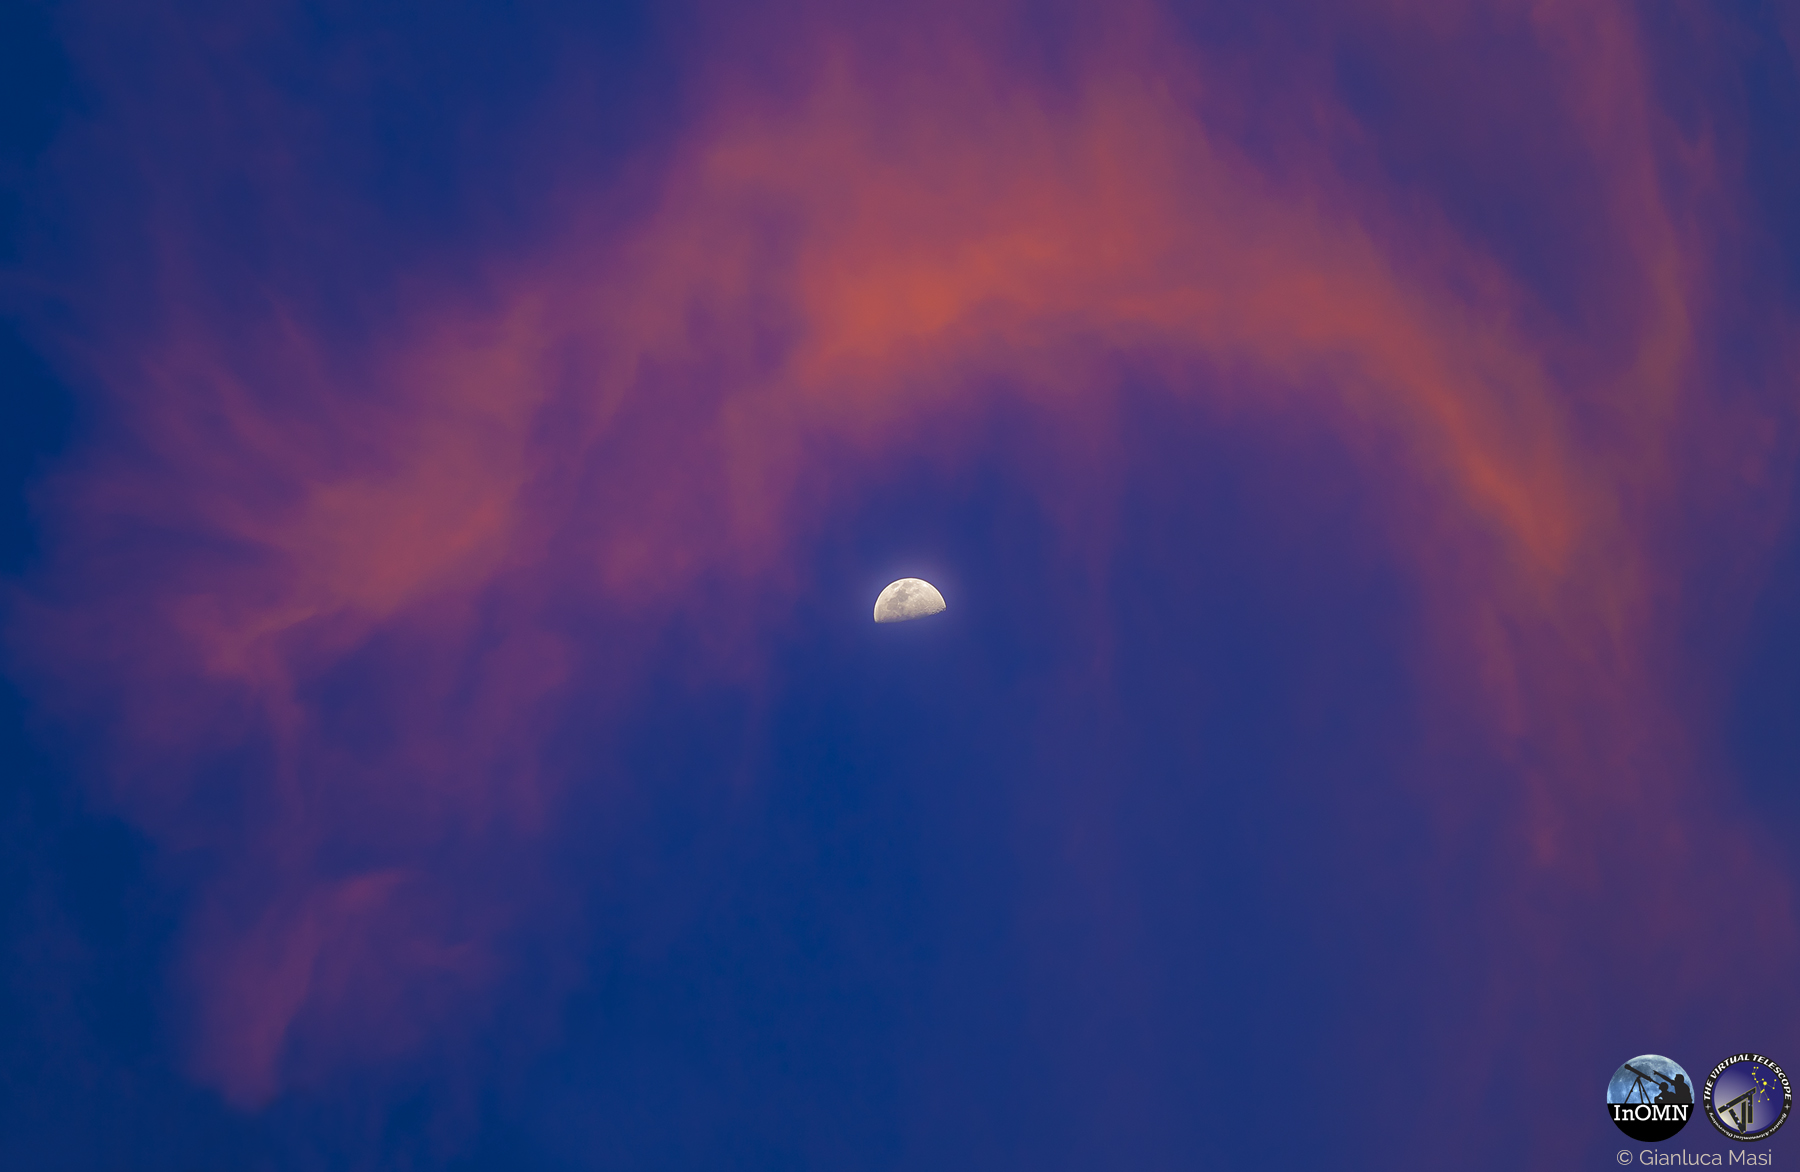 The Moon and the colors of the Sky - La Luna e i colori del cielo - 28 Oct. 2017